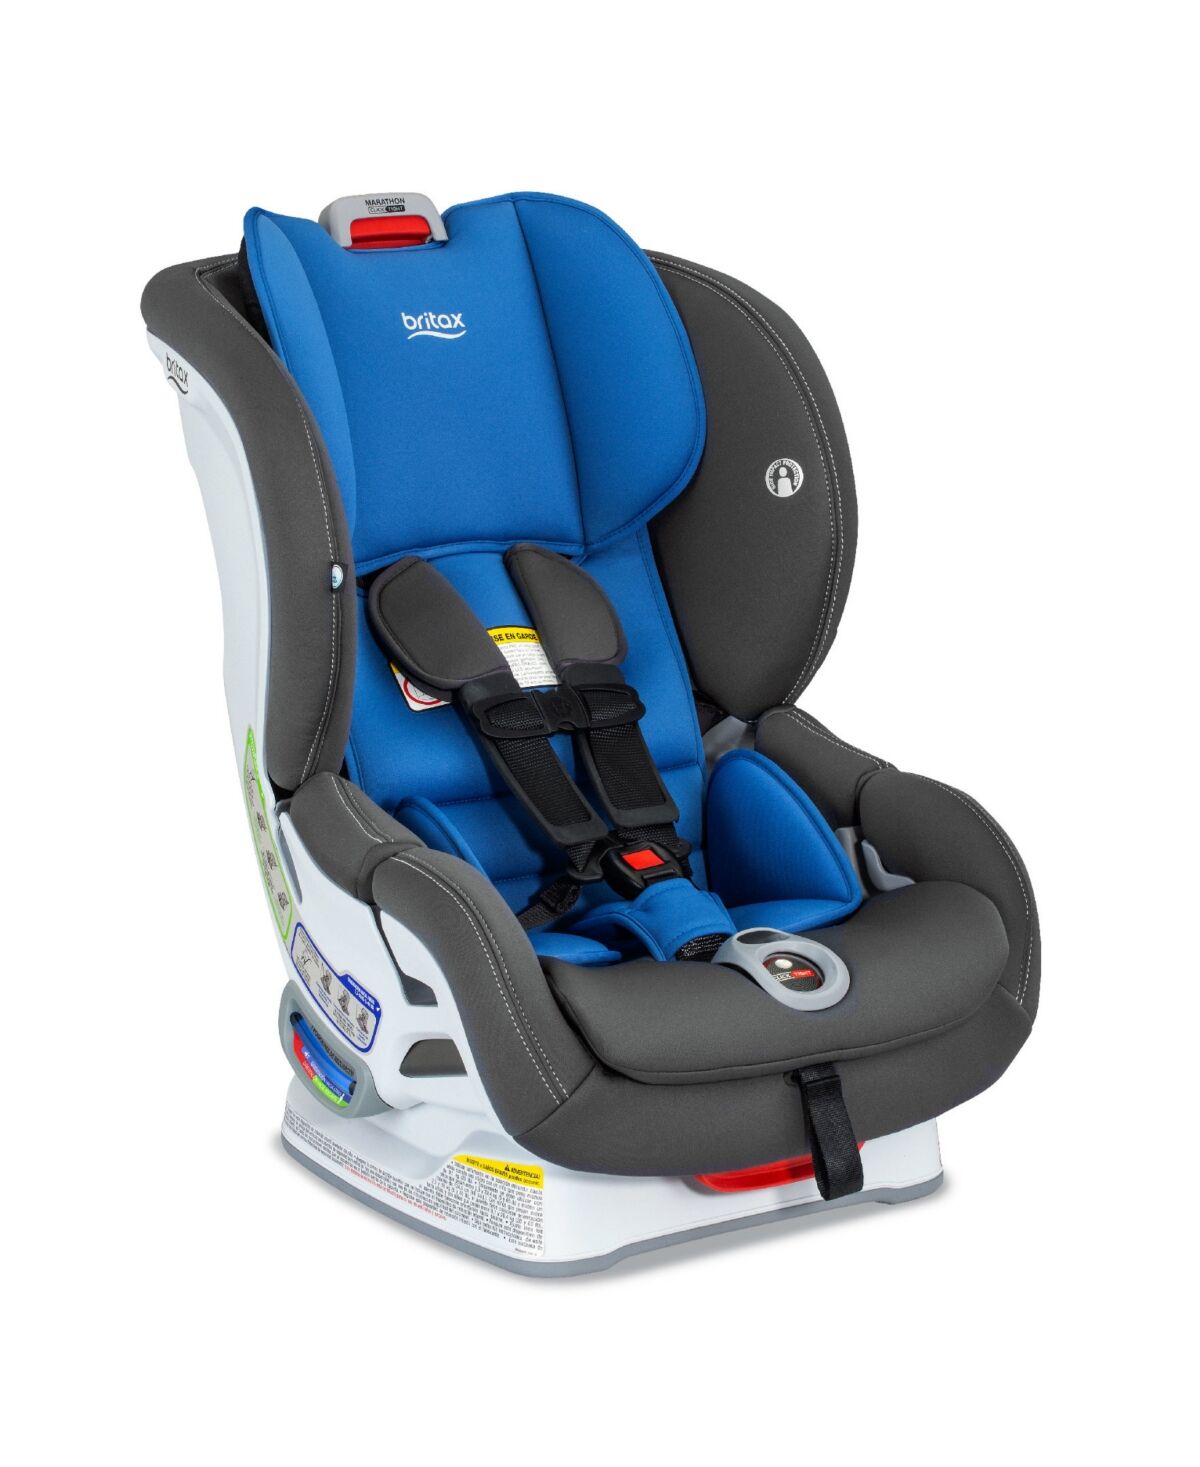 Britax Marathon Baby Clicktight Convertible Car Seat - Mod Blue